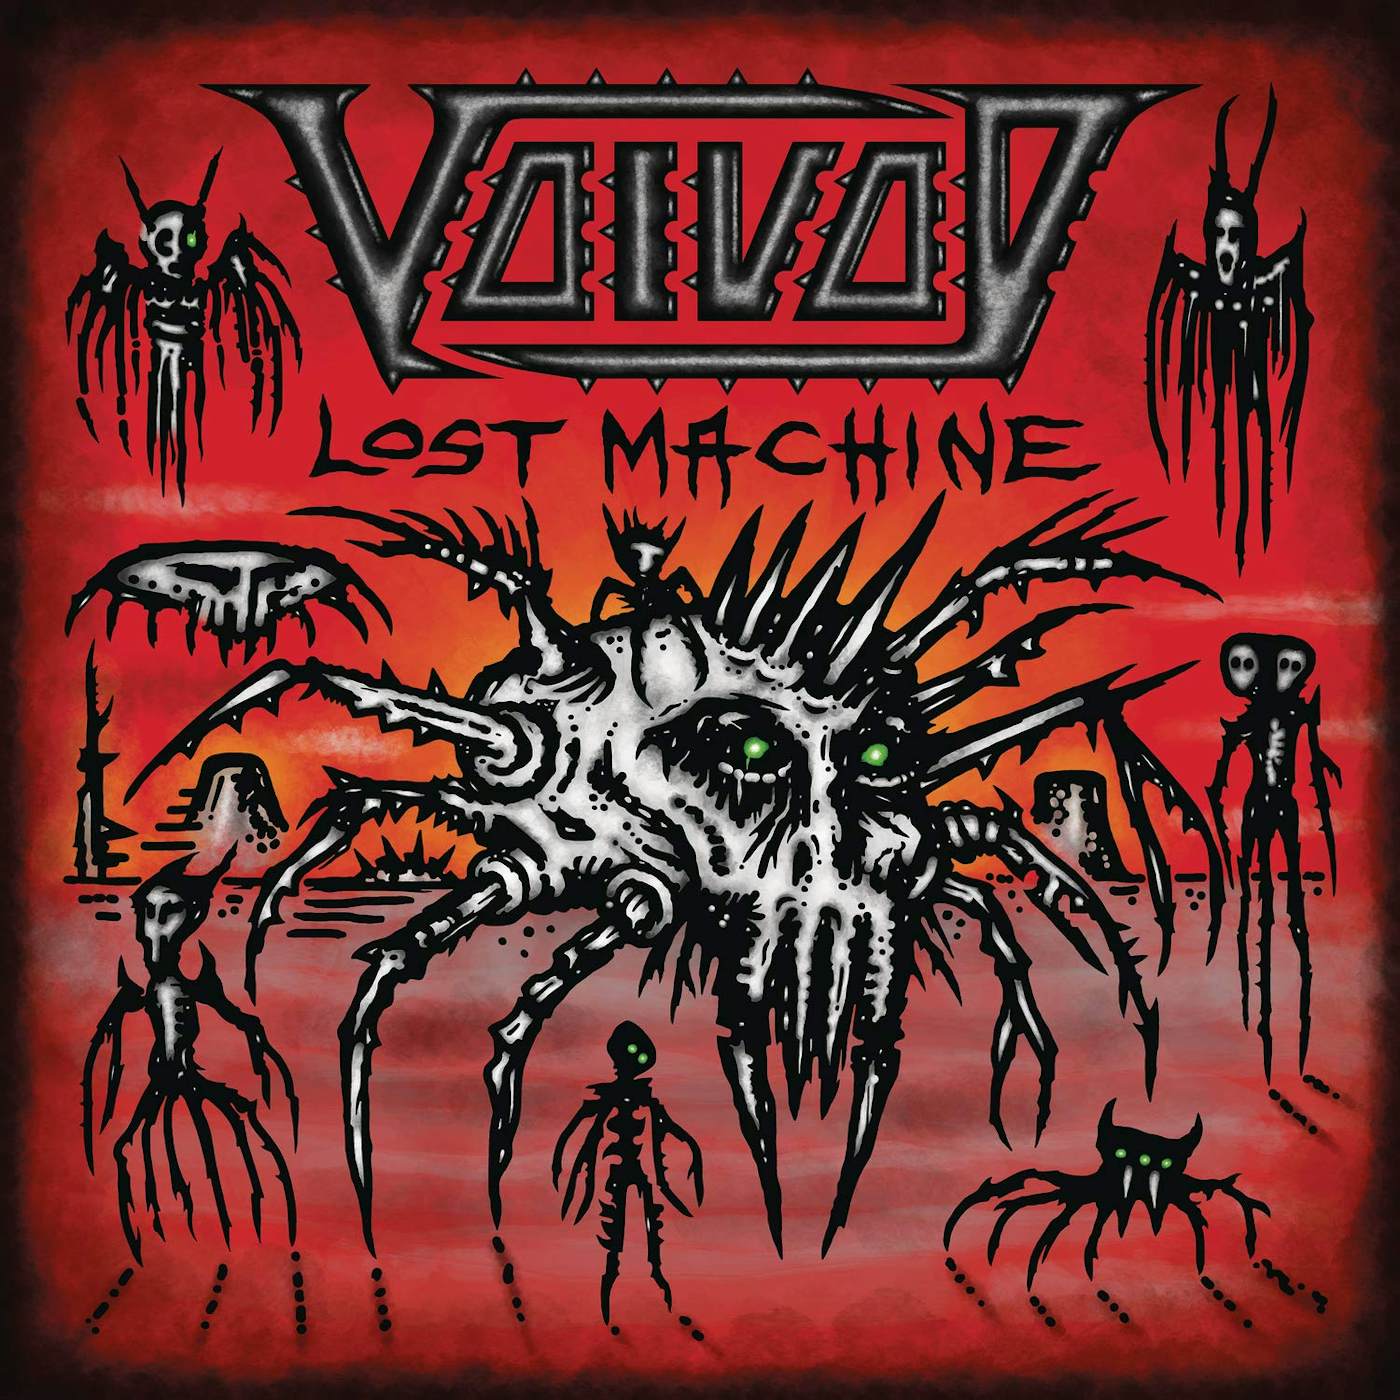 Voivod Lost Machine - Live Vinyl Record